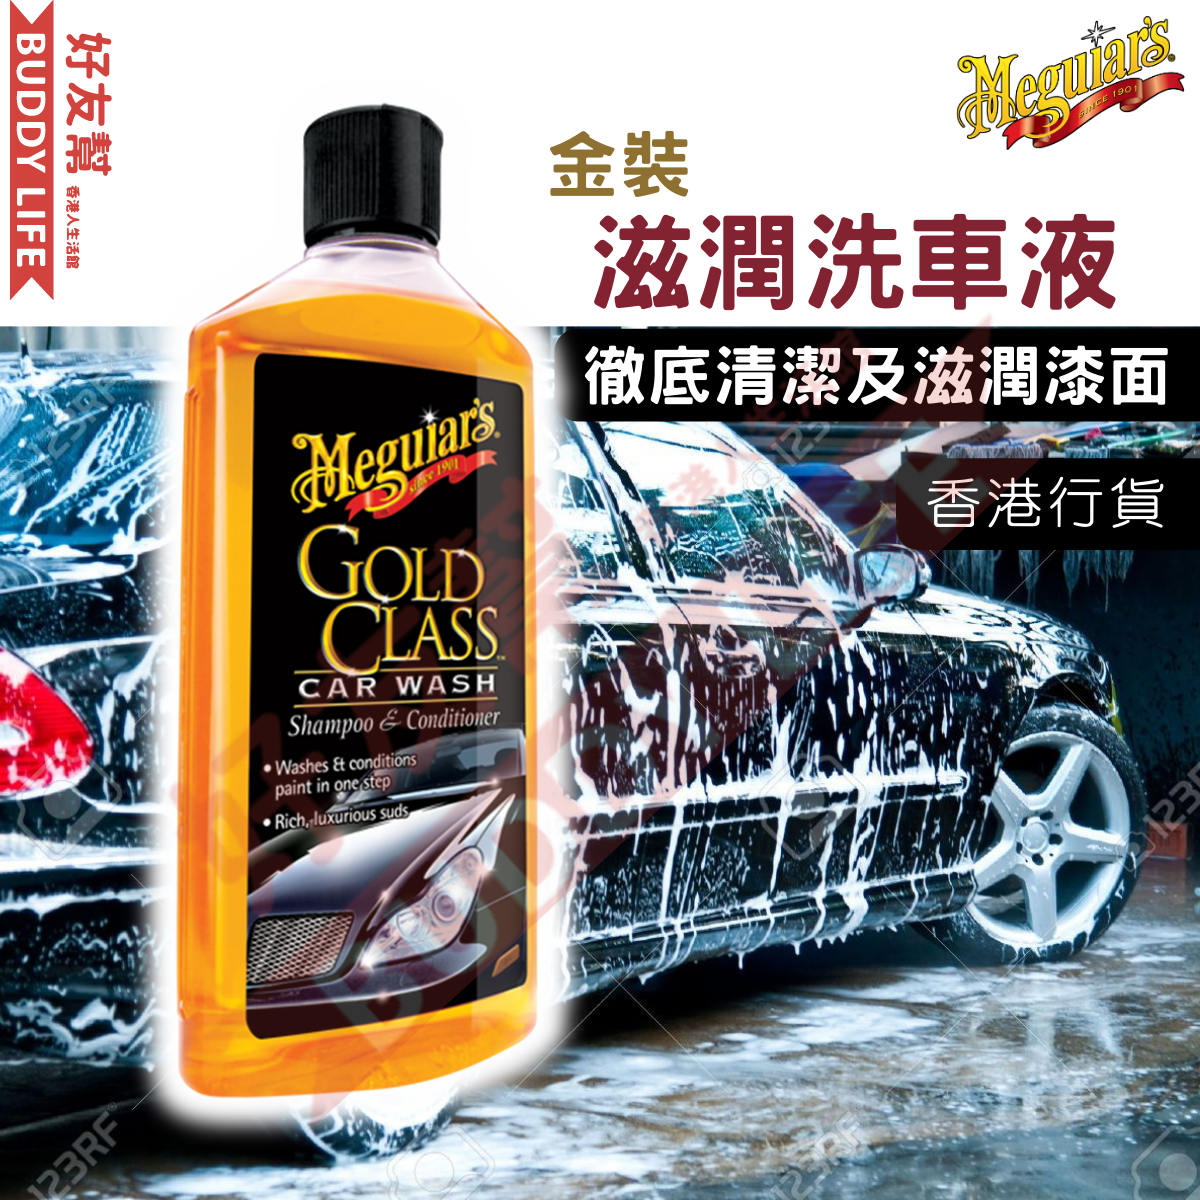 Gold Class Car Wash Shampoo & Conditioner - Meguiars UK